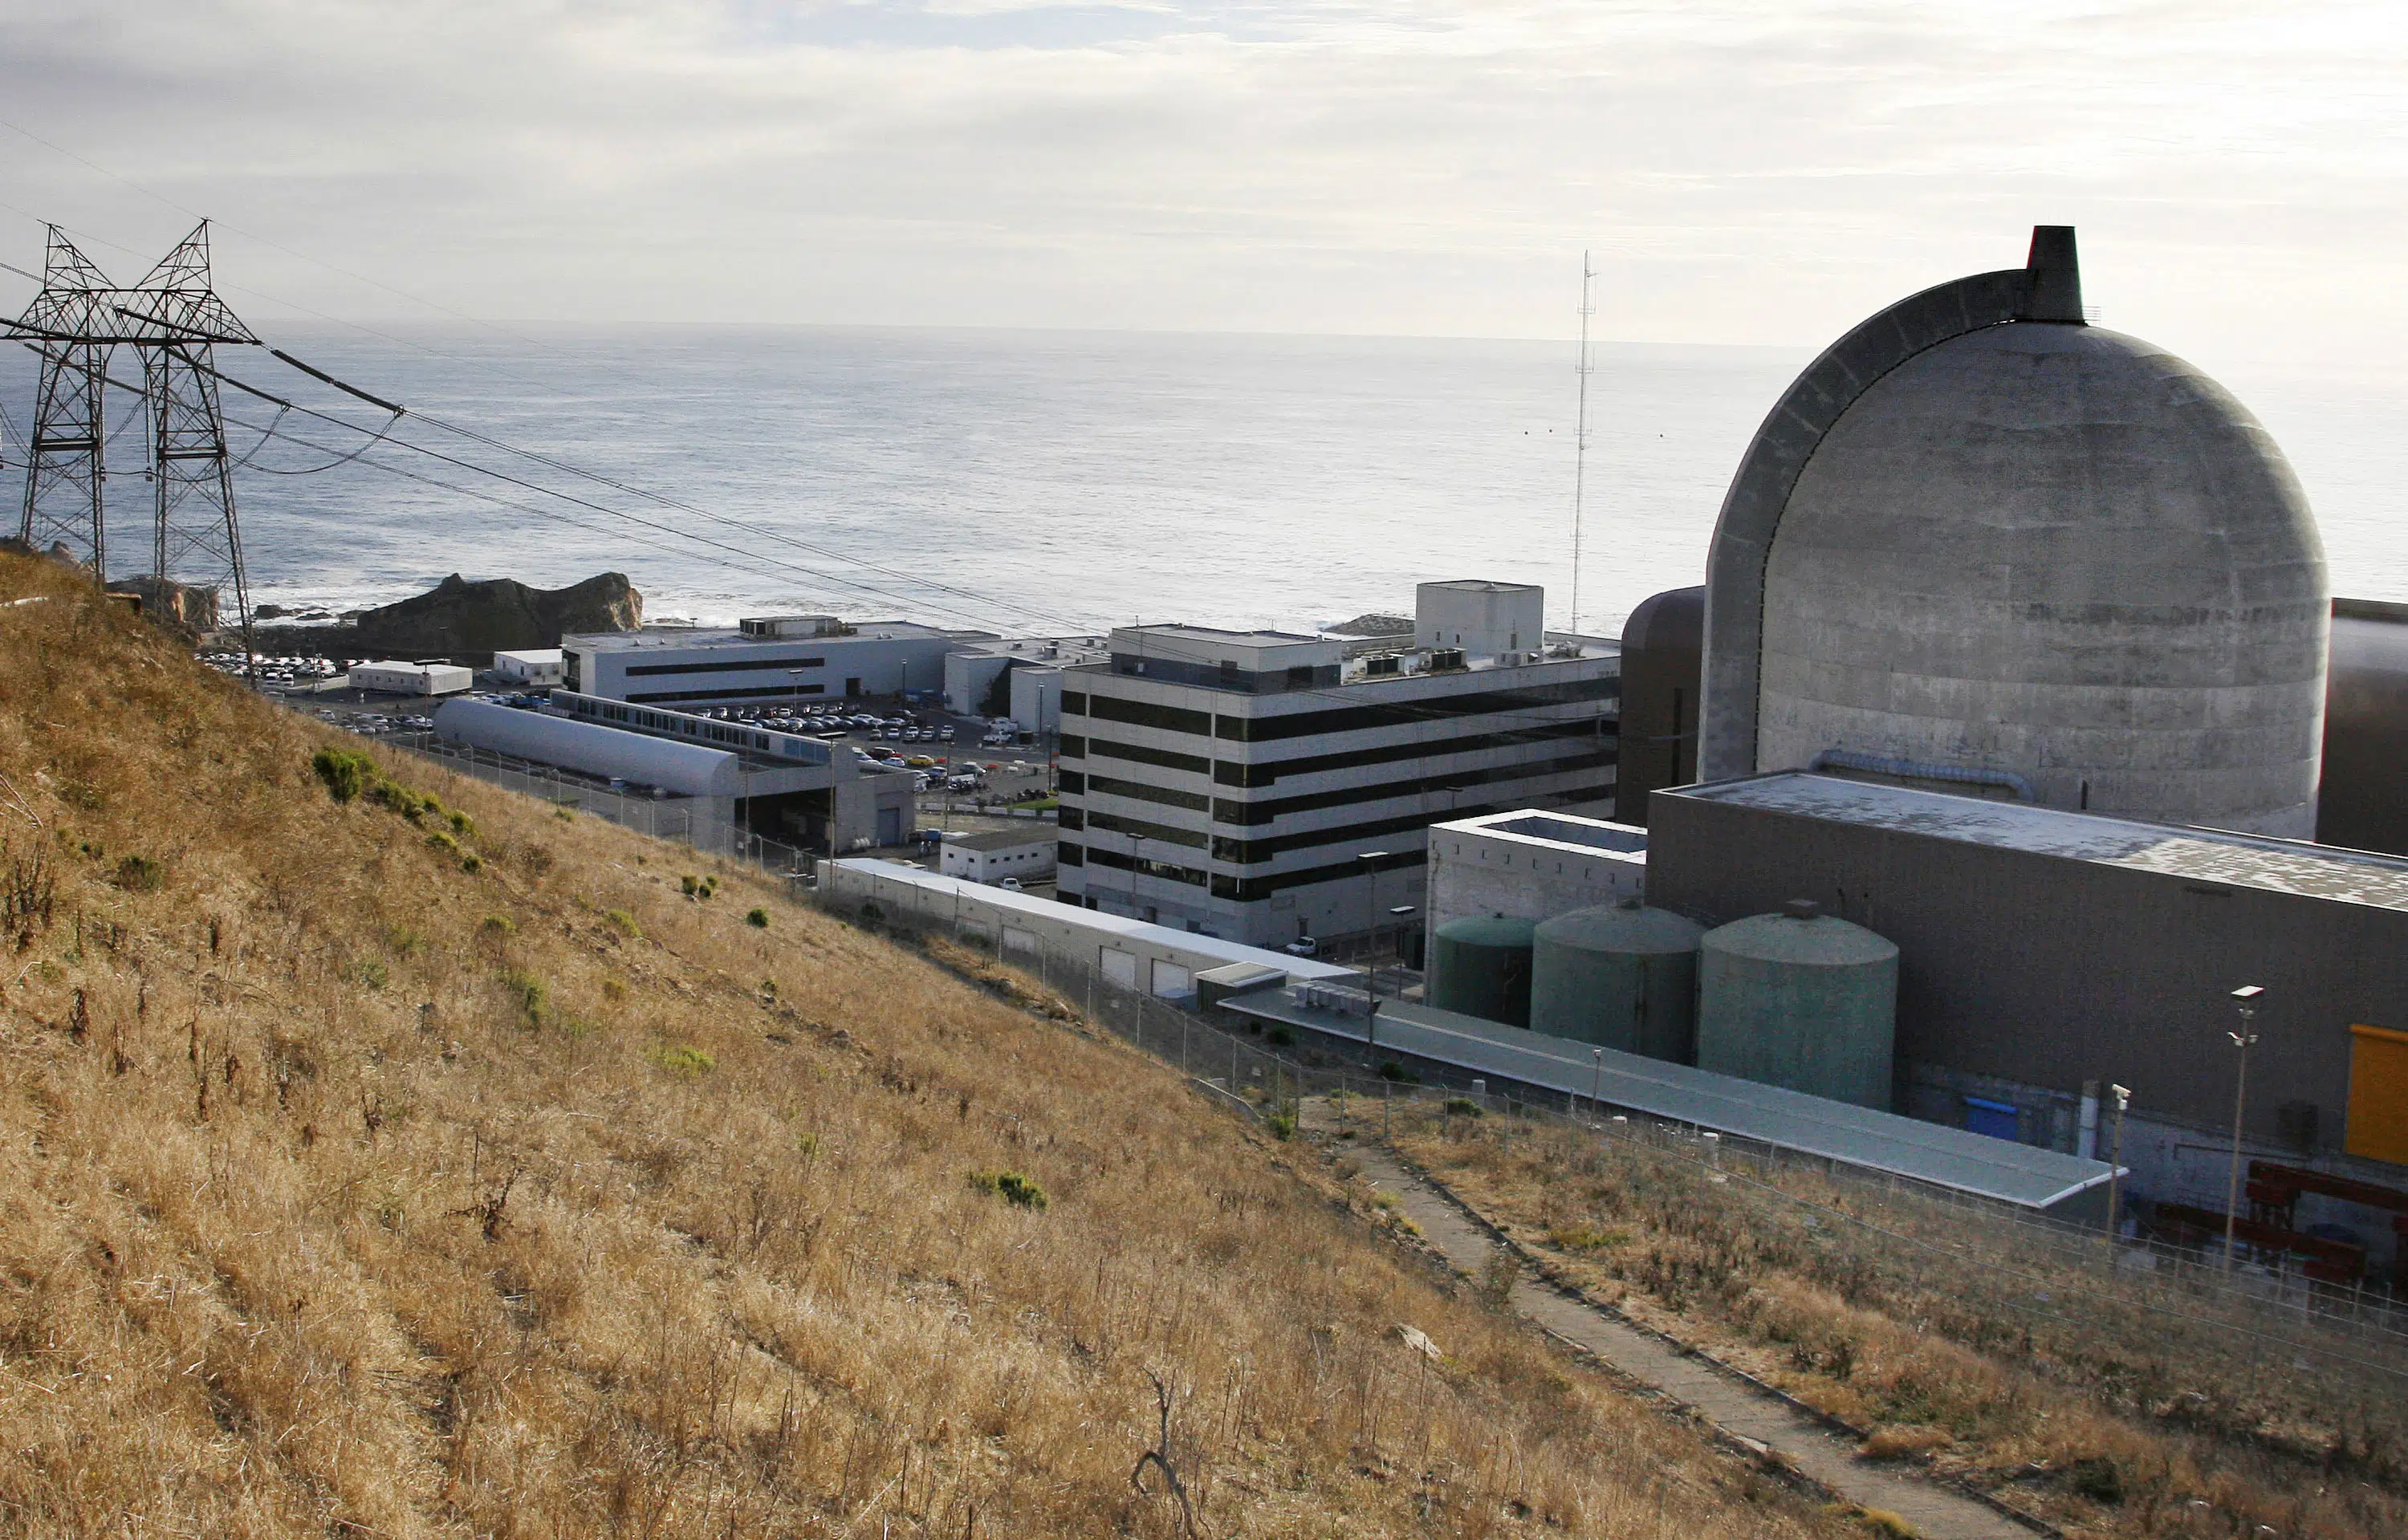  Regulators nix proposal on California’s last nuclear plant 